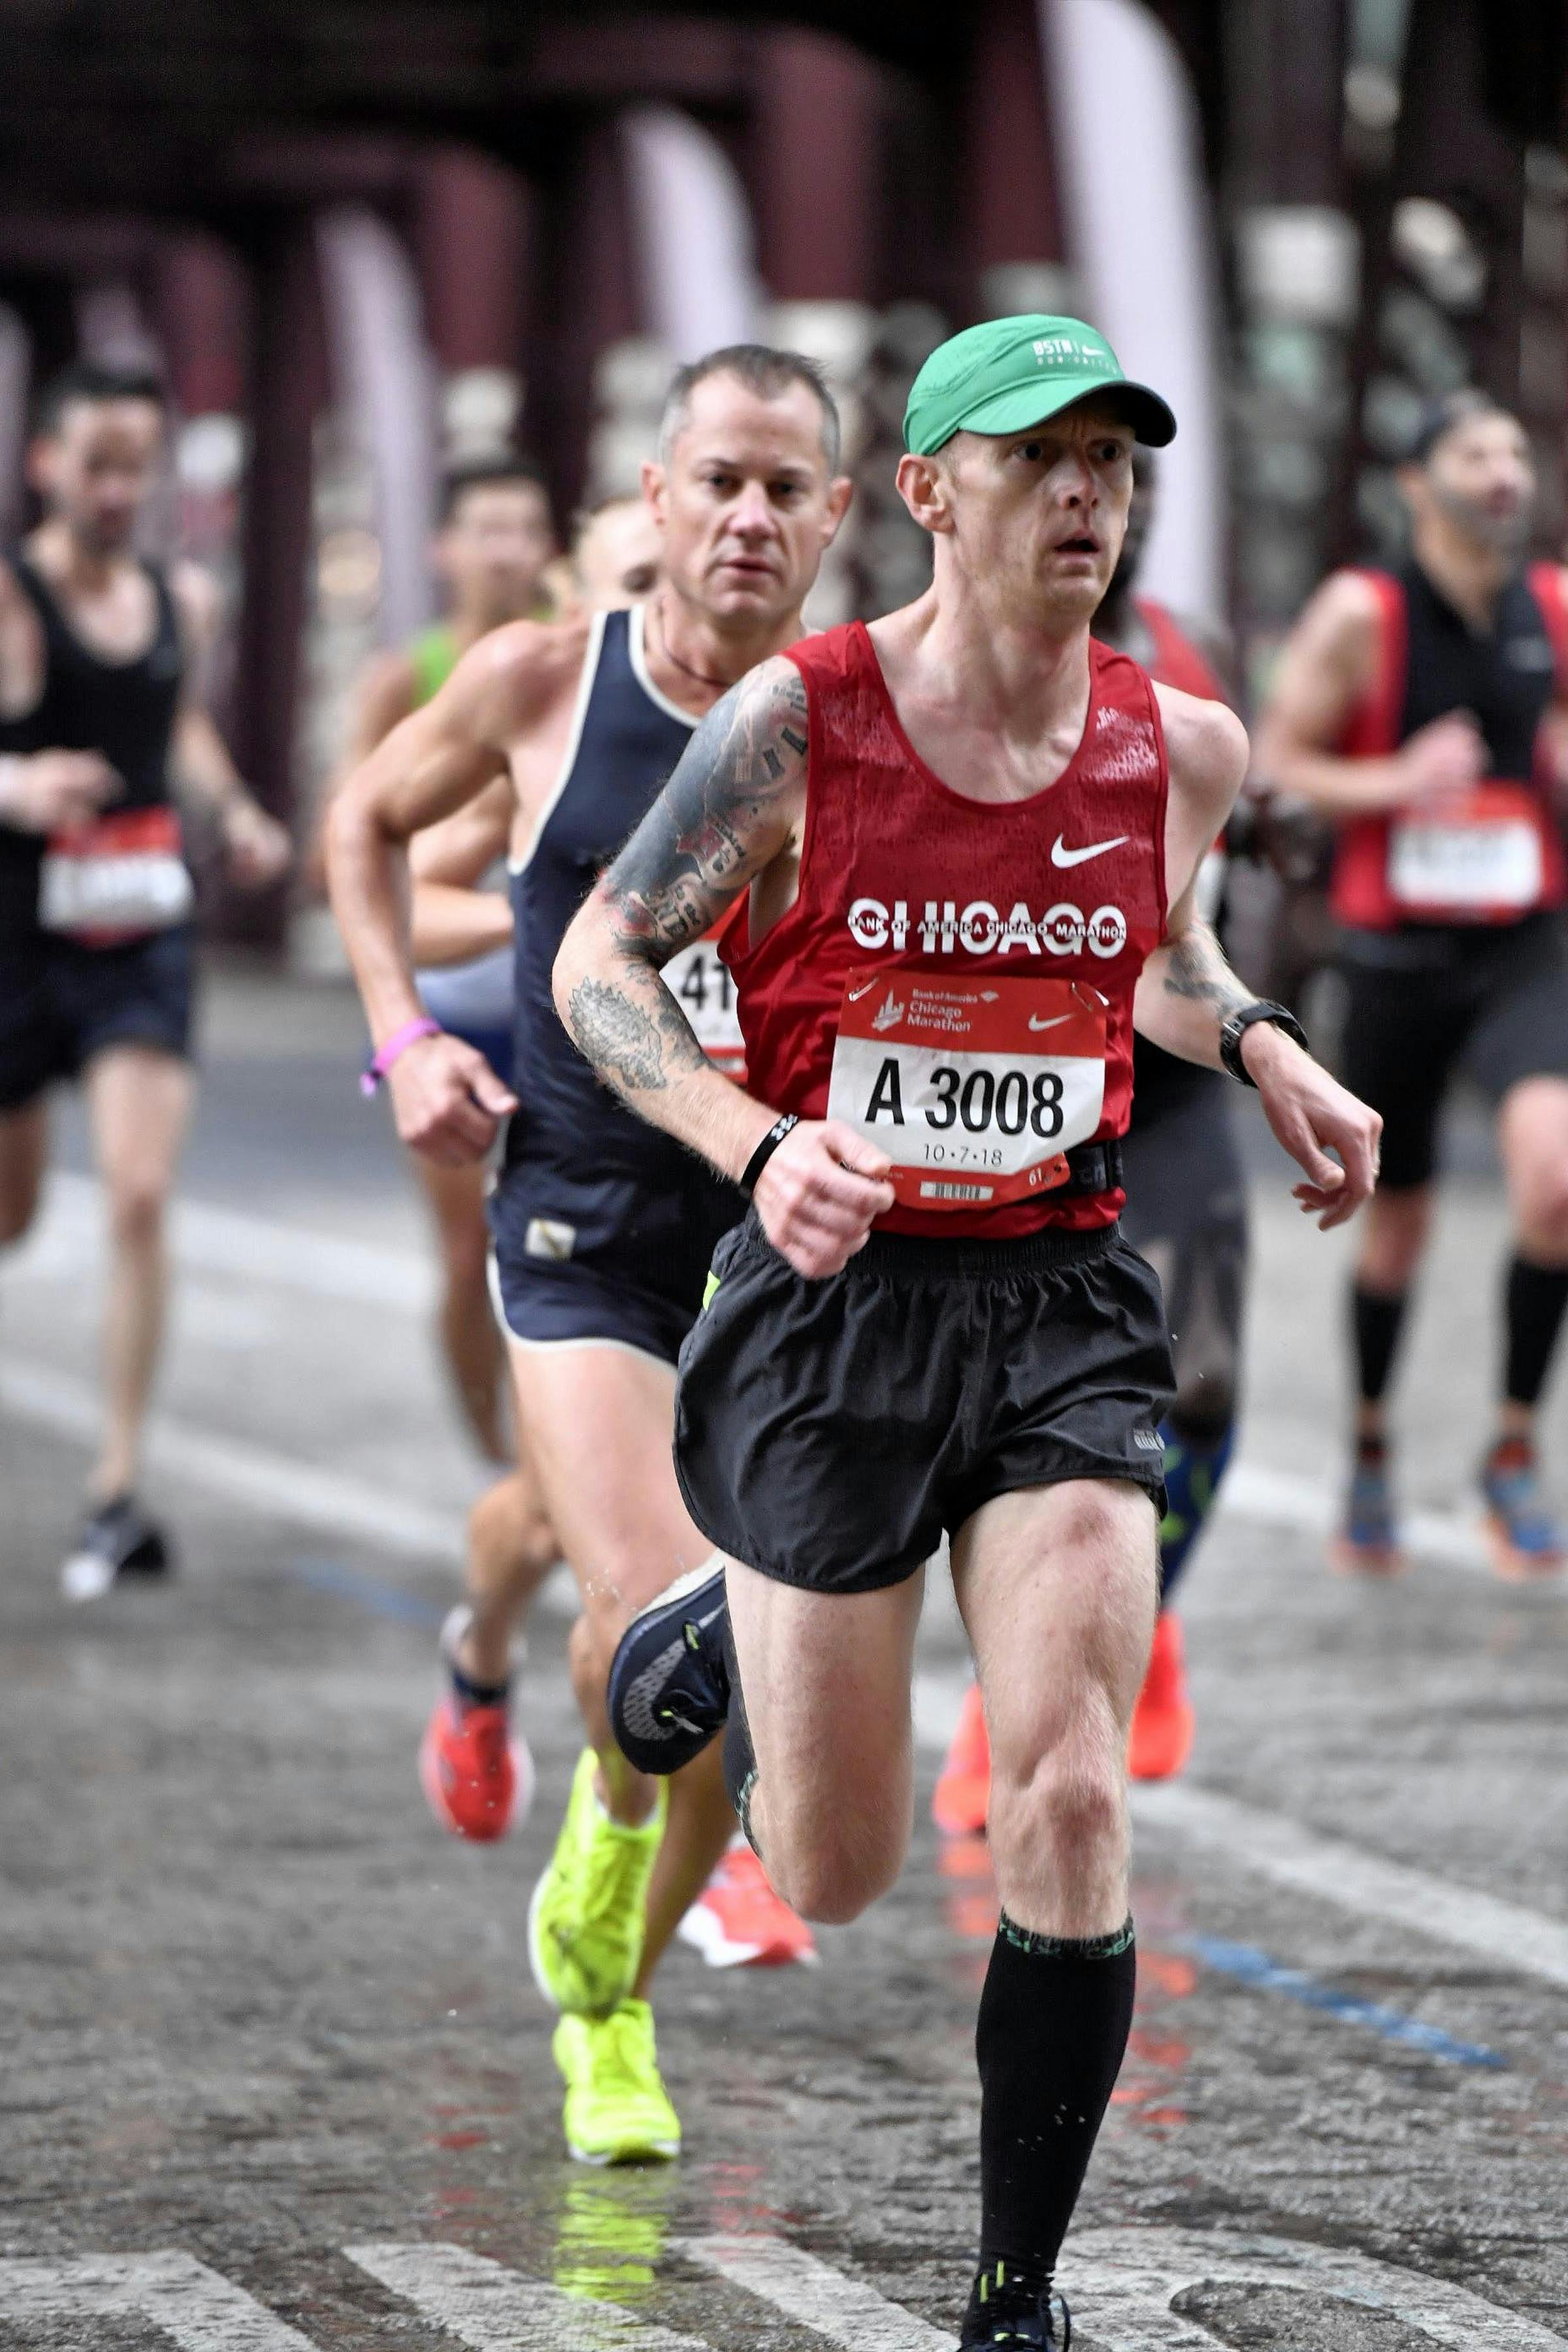 Jon competing at the Chicago Marathon in 2018